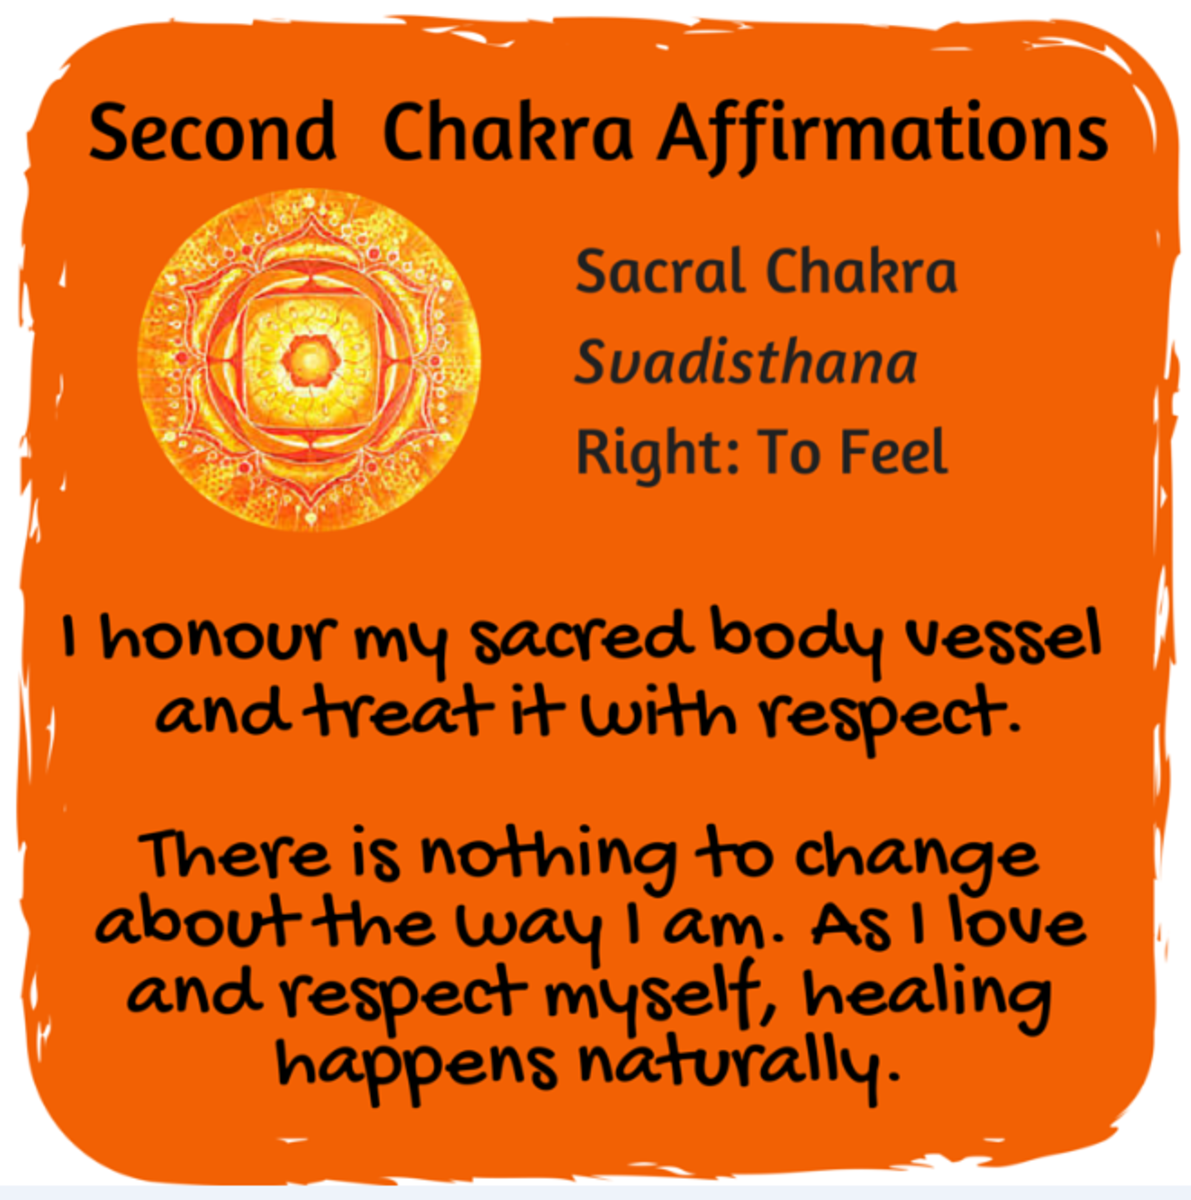 Sacral chakra affirmations